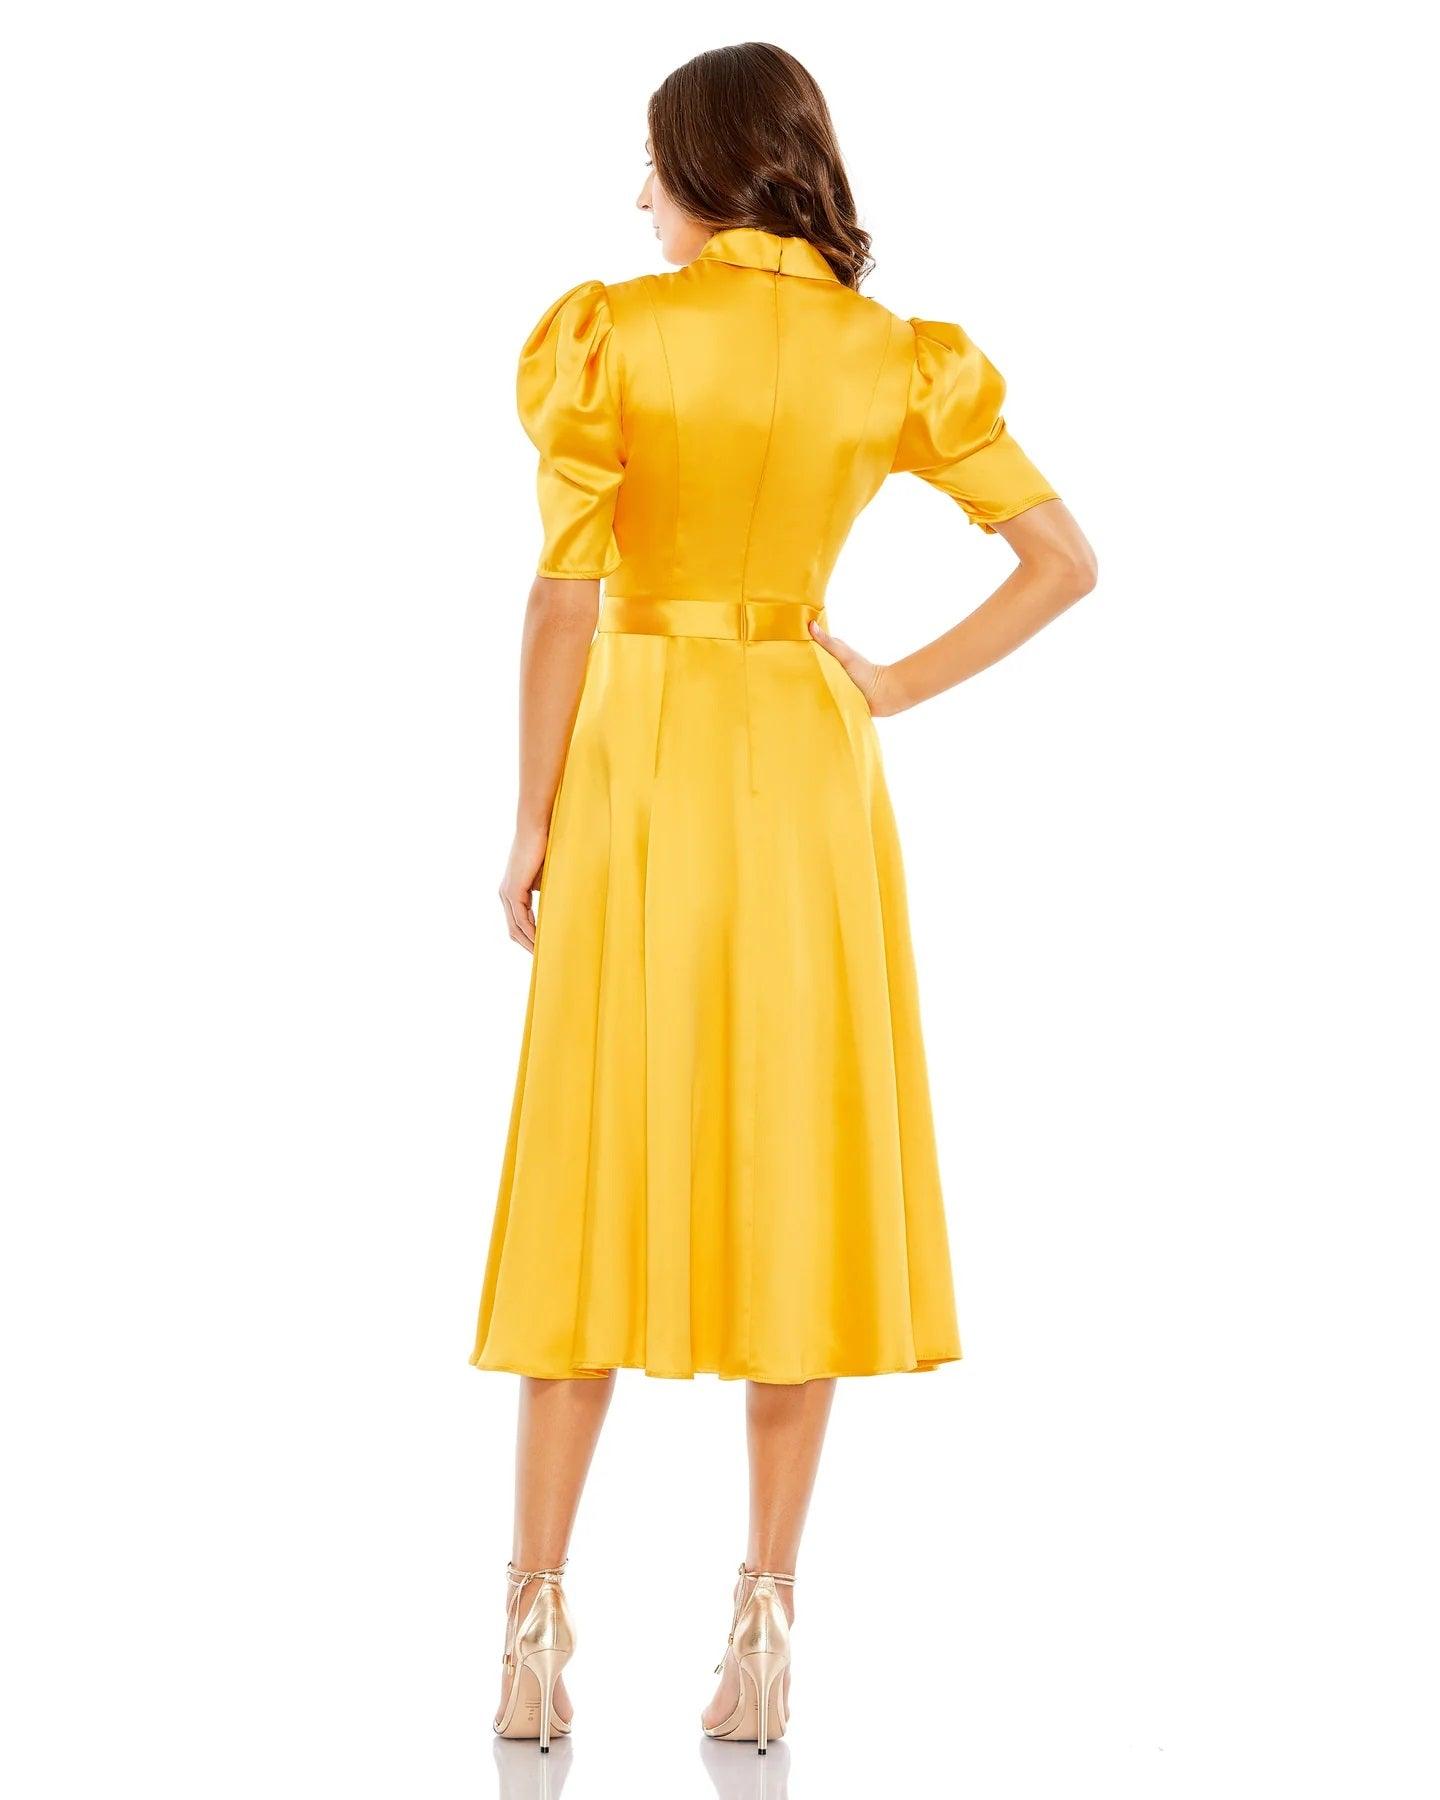 Mac Duggal 26628 Short Sleeve Tea Length Dress Sale